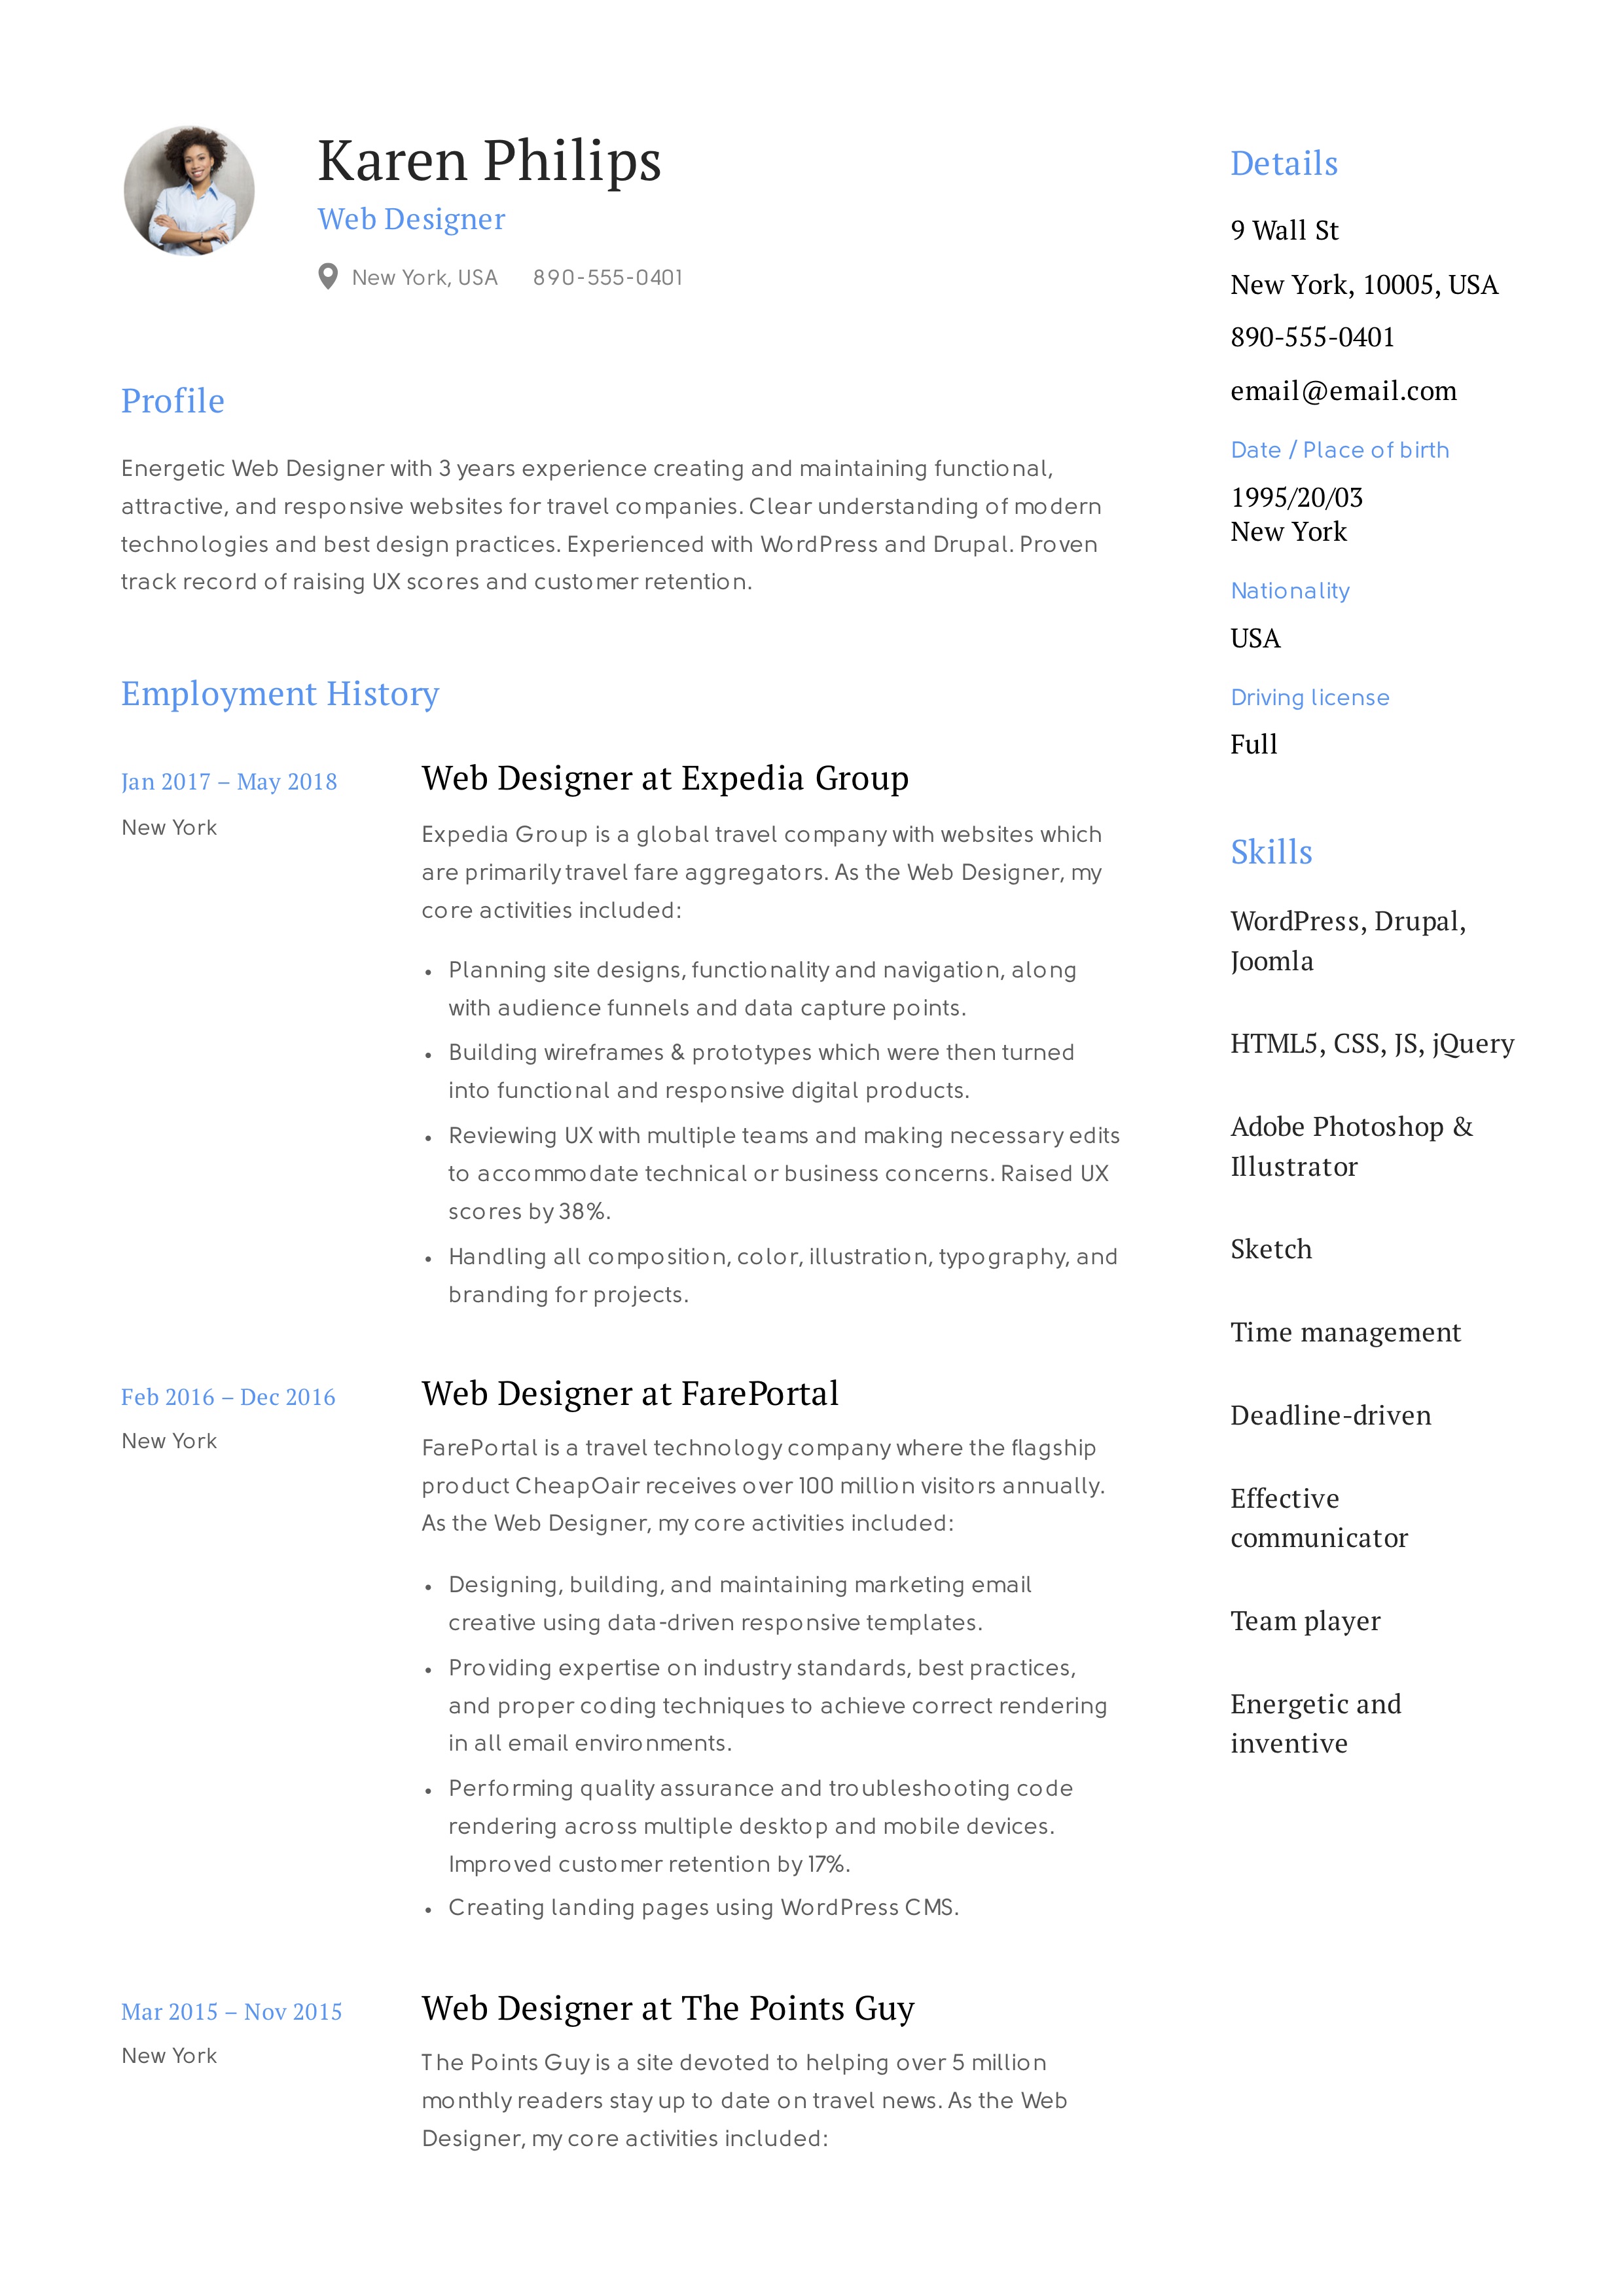 Web designer resume